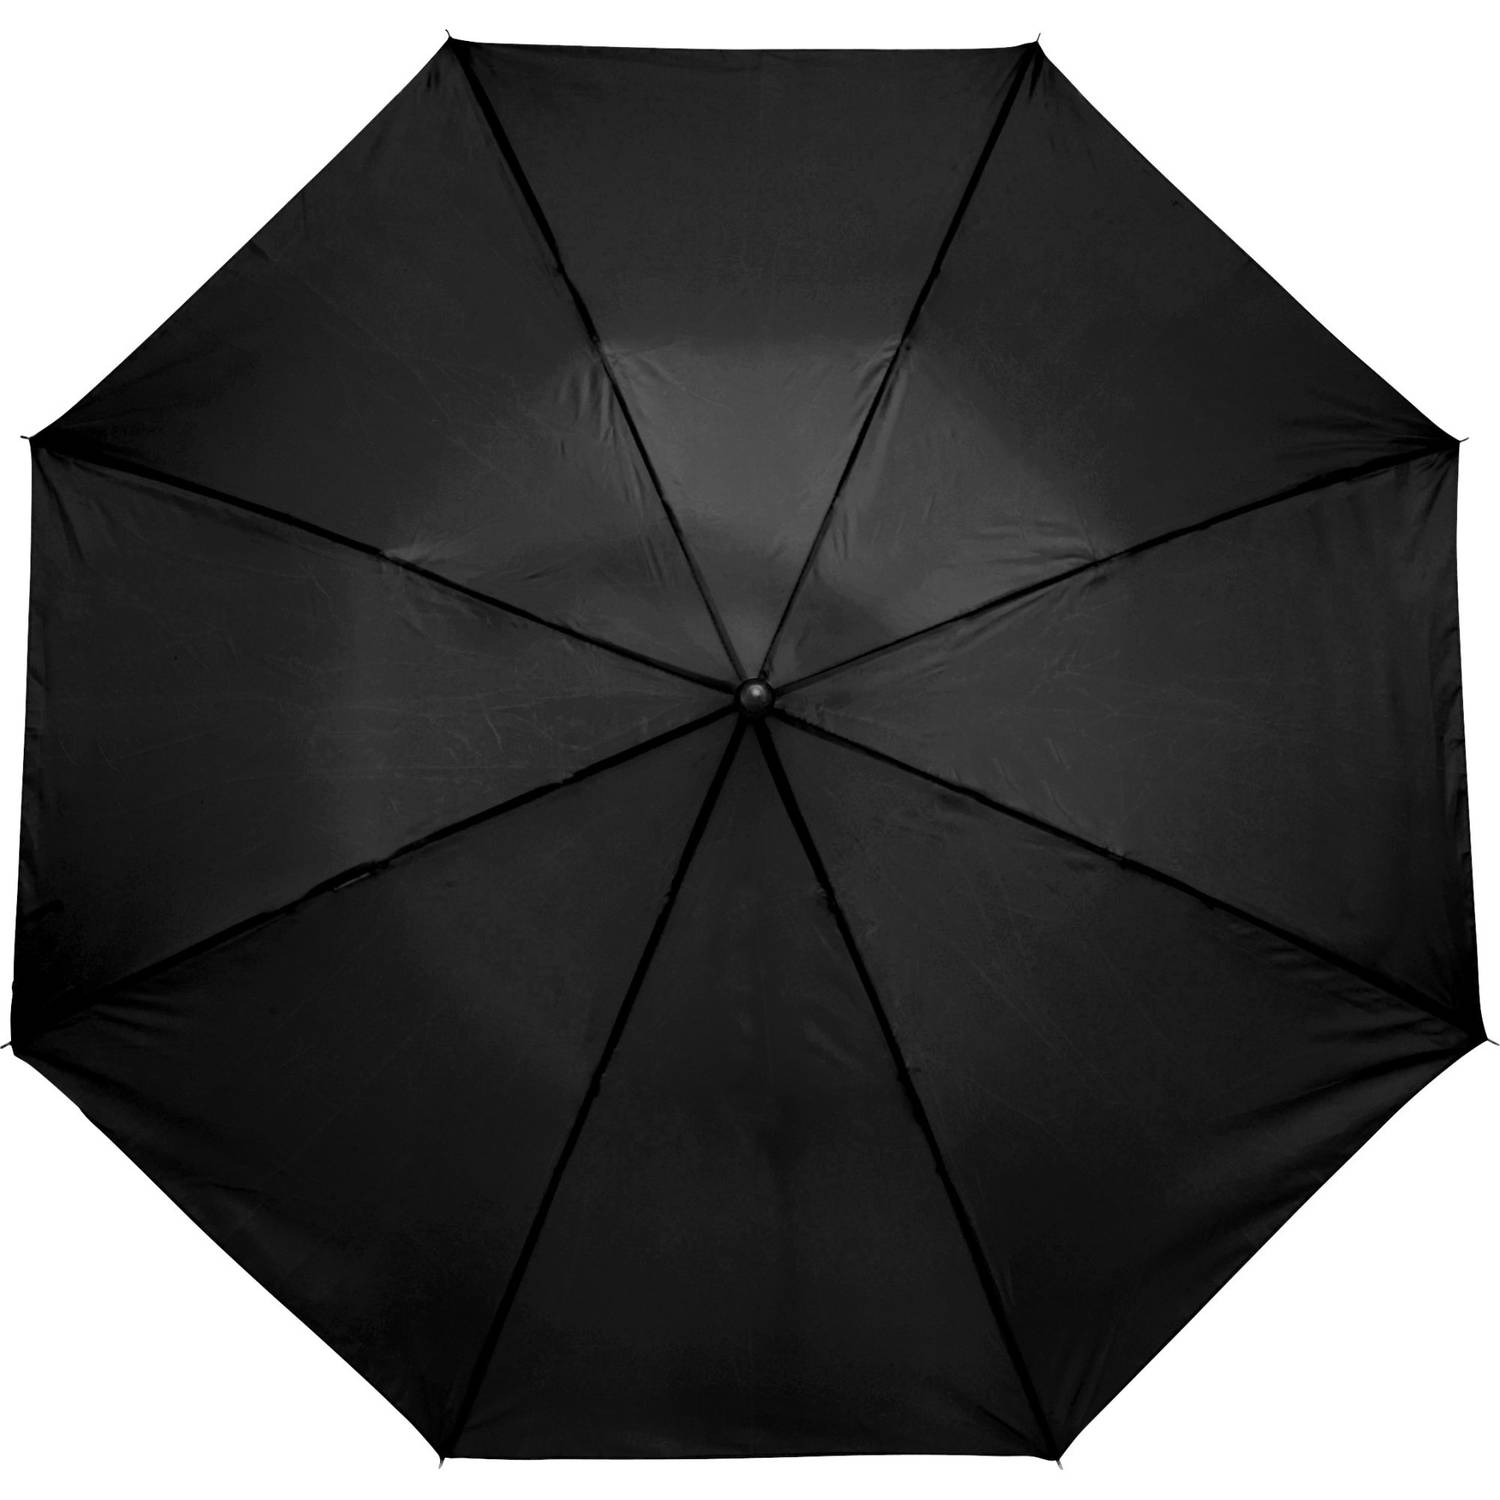 Kleine opvouwbare paraplu zwart 93 cm - Paraplu's